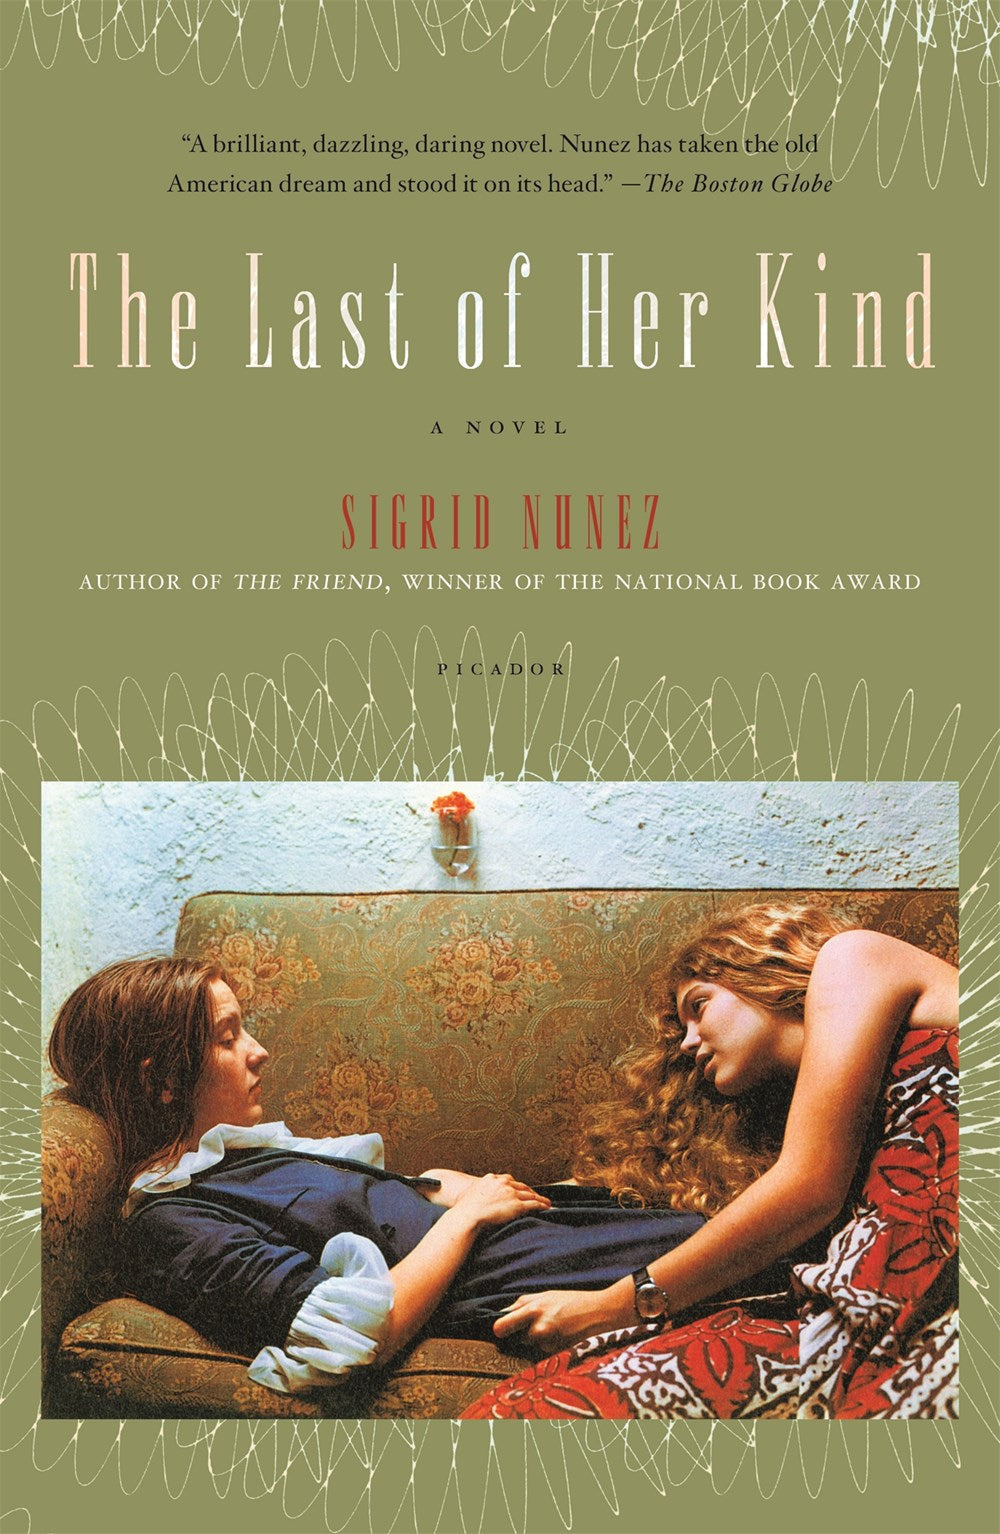 The Last of Her Kind: A Novel by Sigrid Nunez